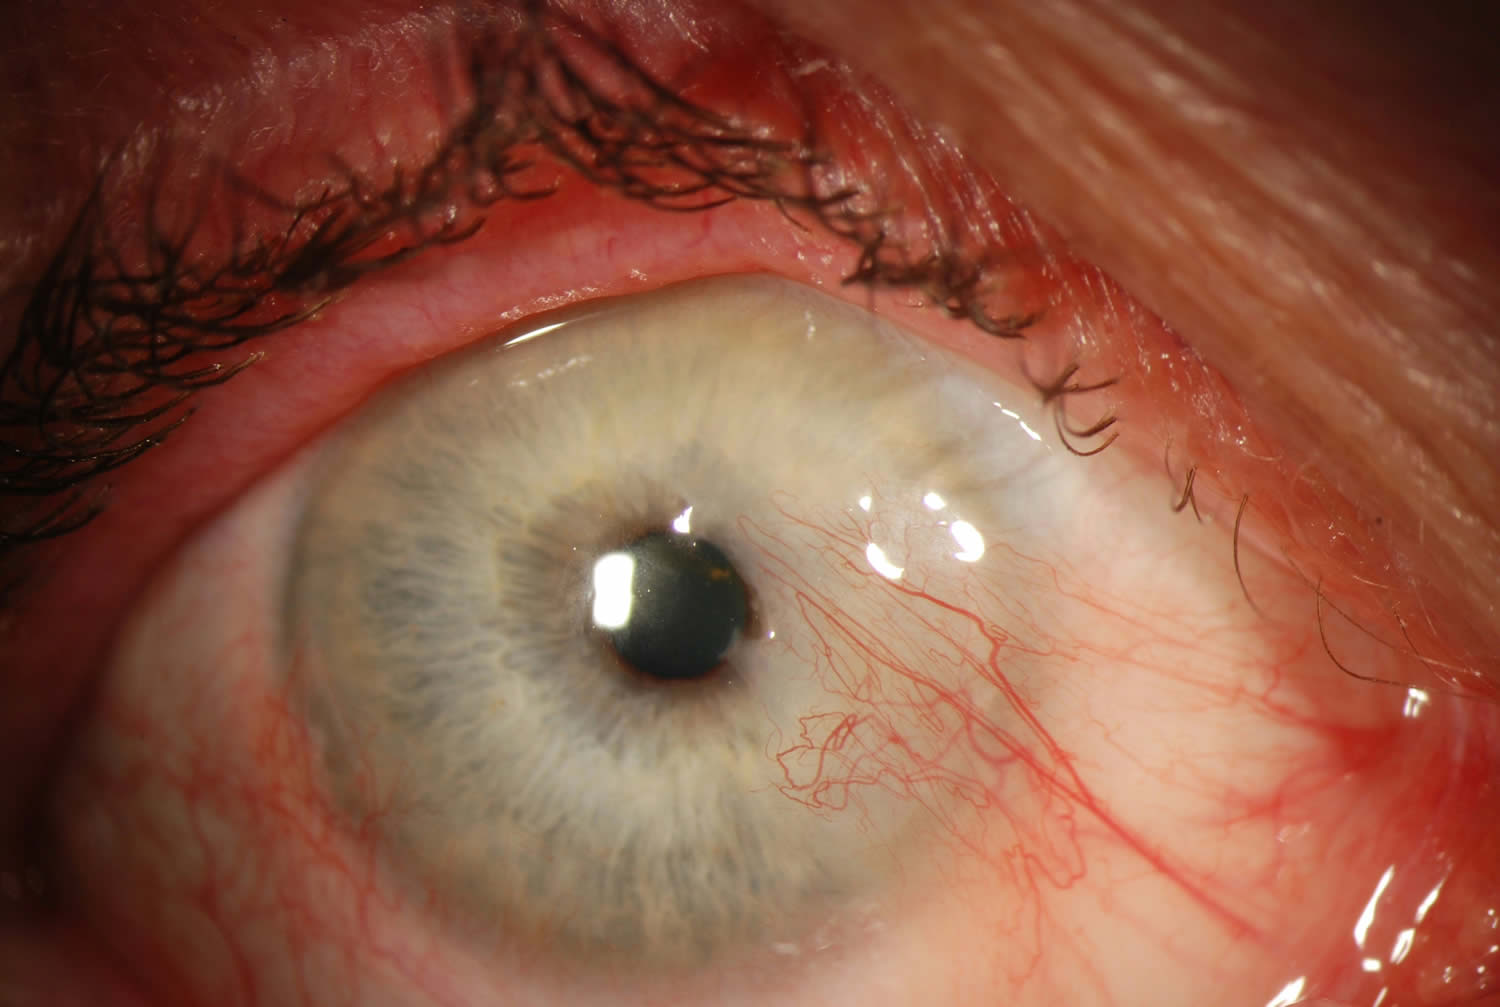 Pterygium eye